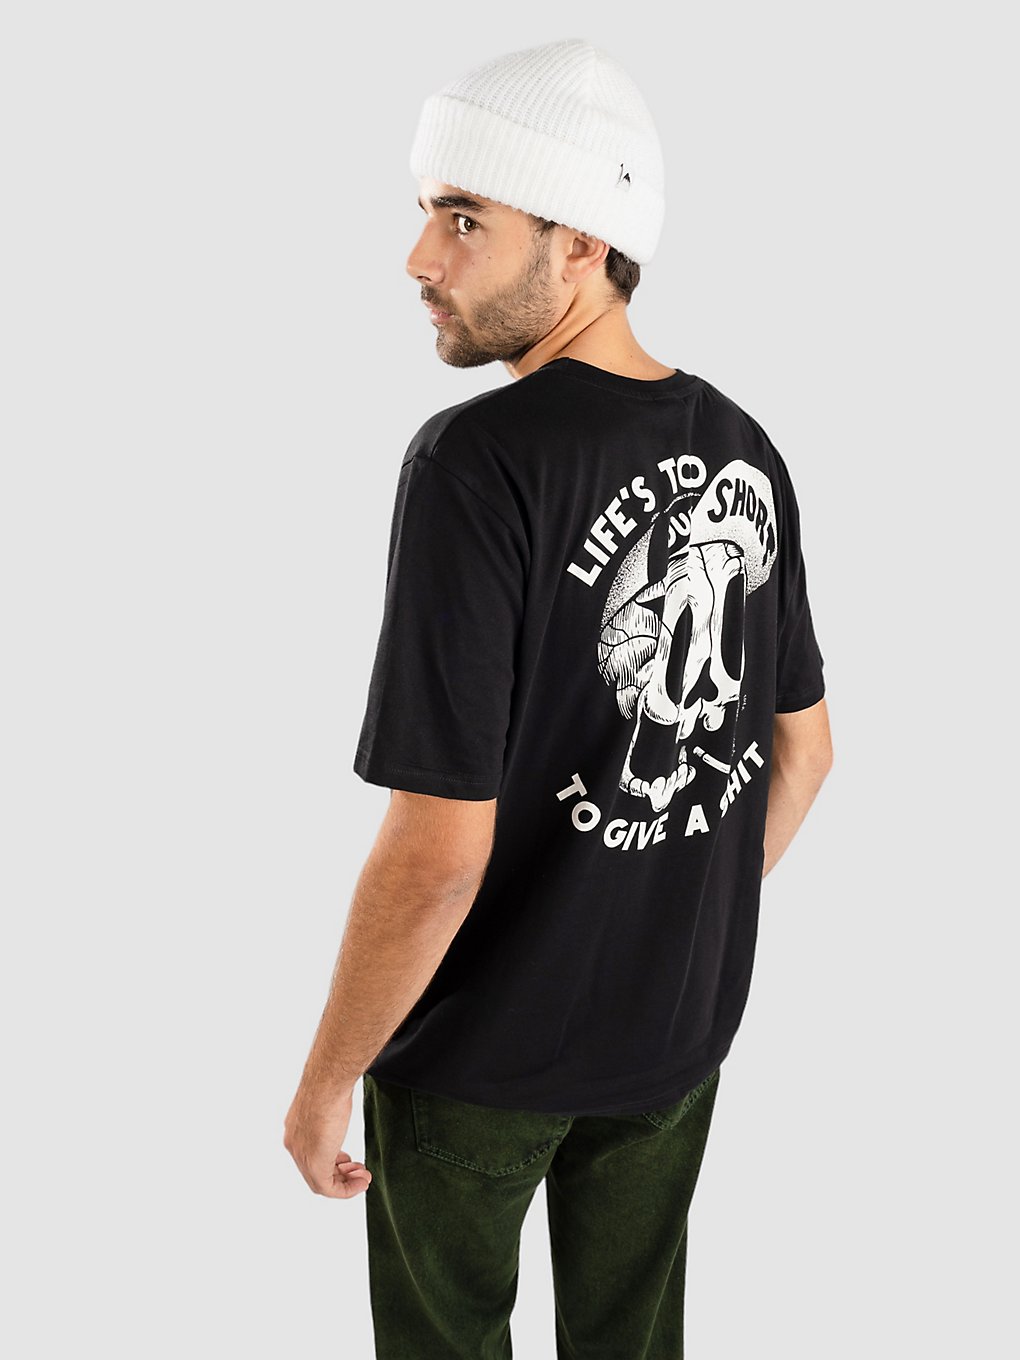 The Dudes Too Short Smokes T-Shirt black kaufen